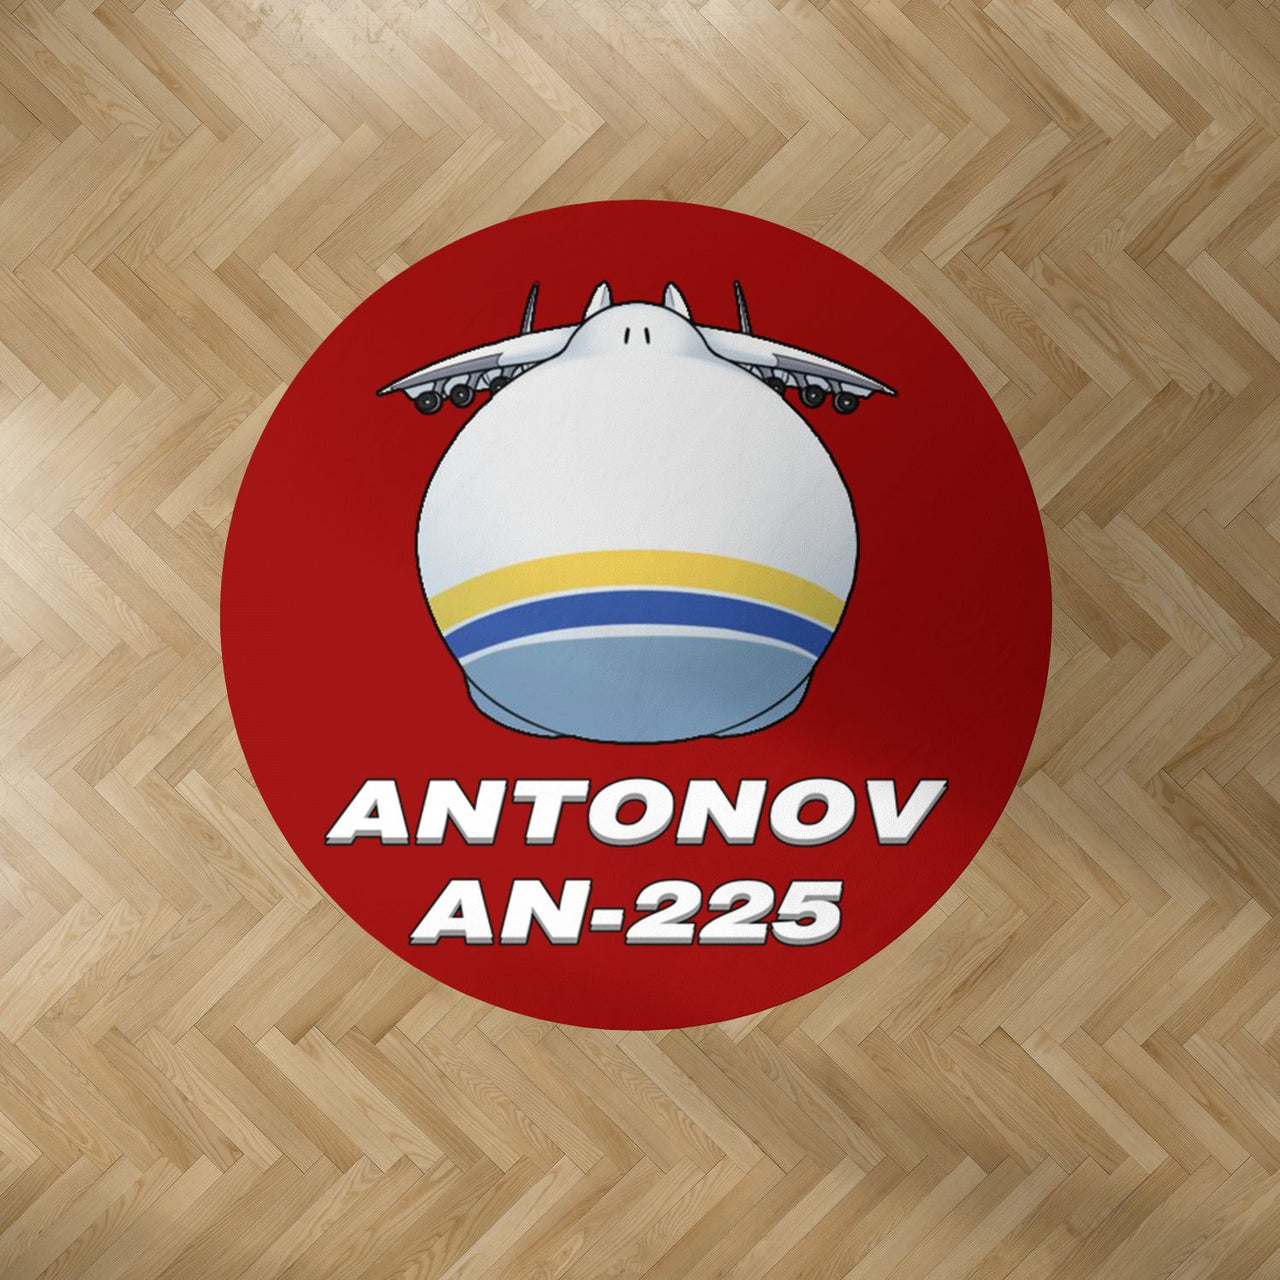 Antonov AN-225 (20) Designed Carpet & Floor Mats (Round)